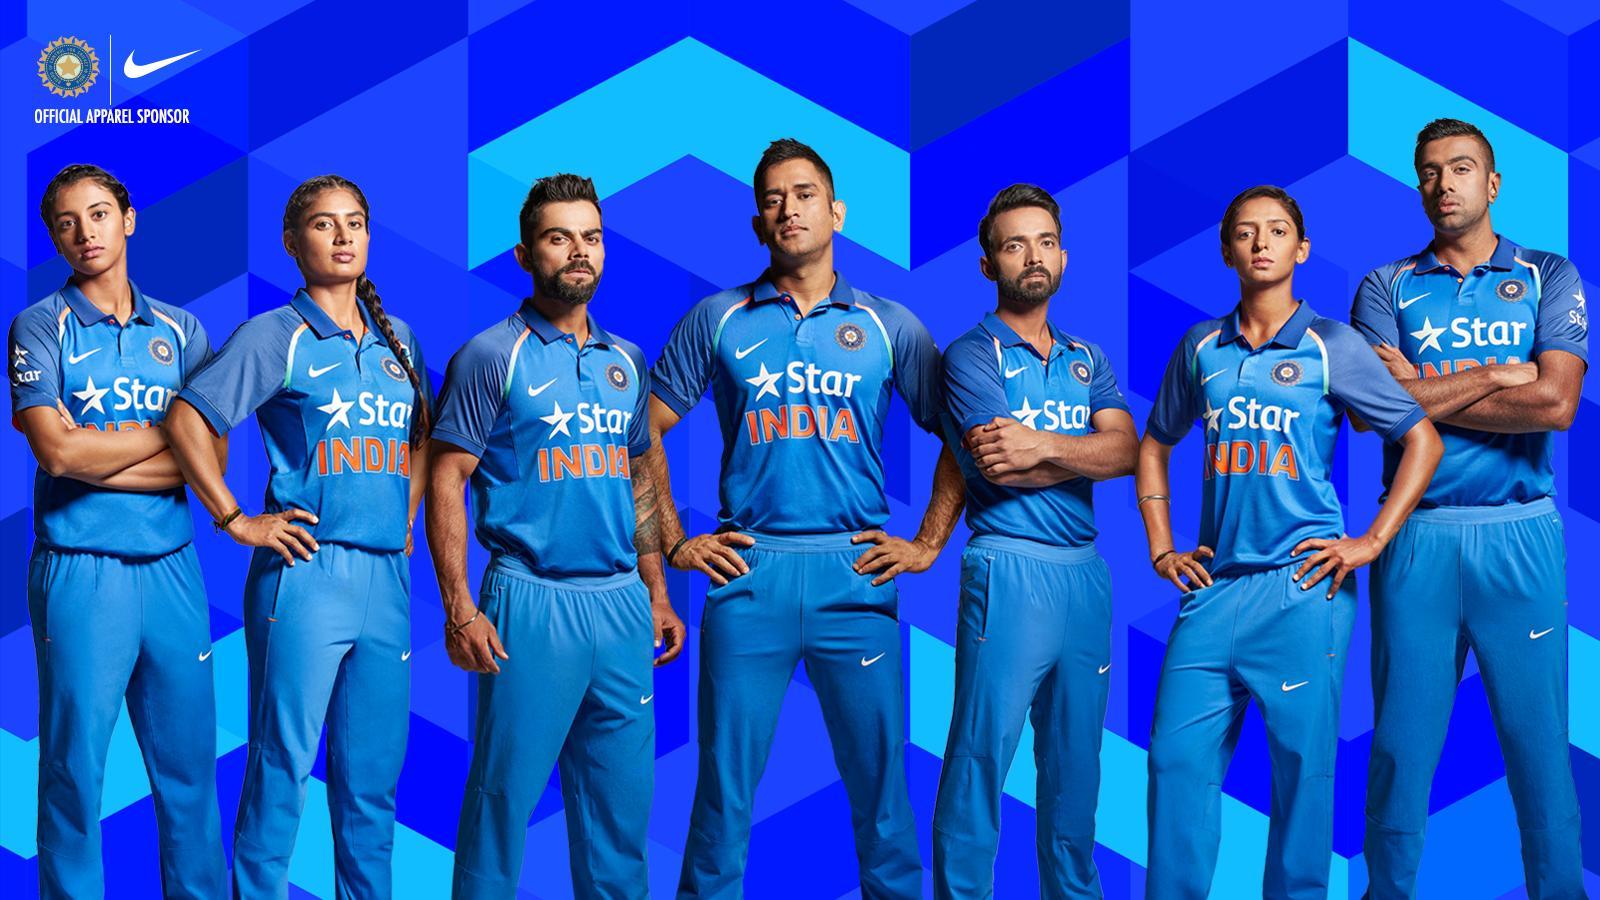 Download Indian Cricket Team Logo On Jersey Wallpaper